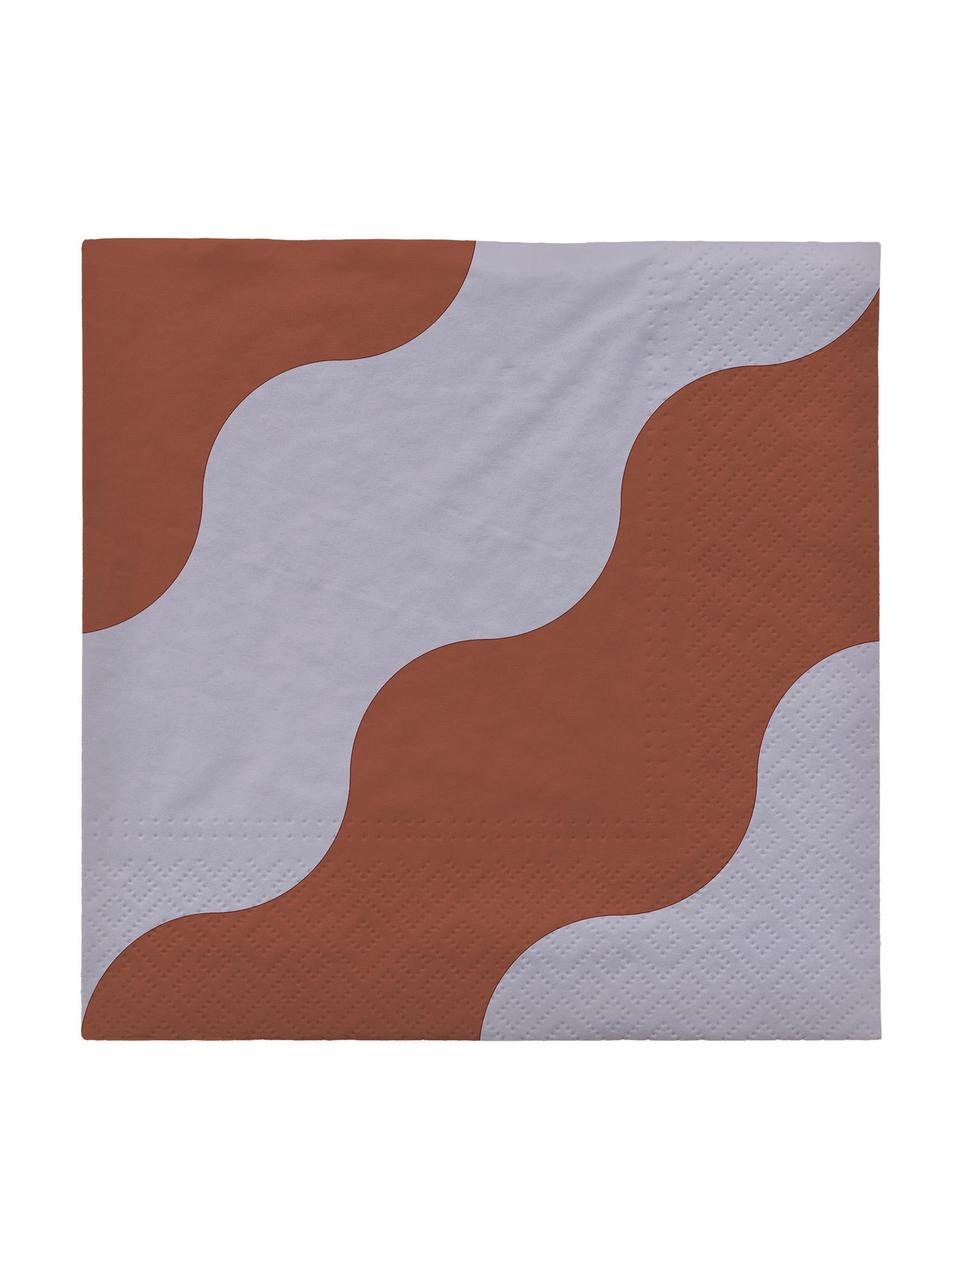 Servilletas de papel Tide, 20 uds., Papel, Rojo teja, gris, An 33 x L 33 cm